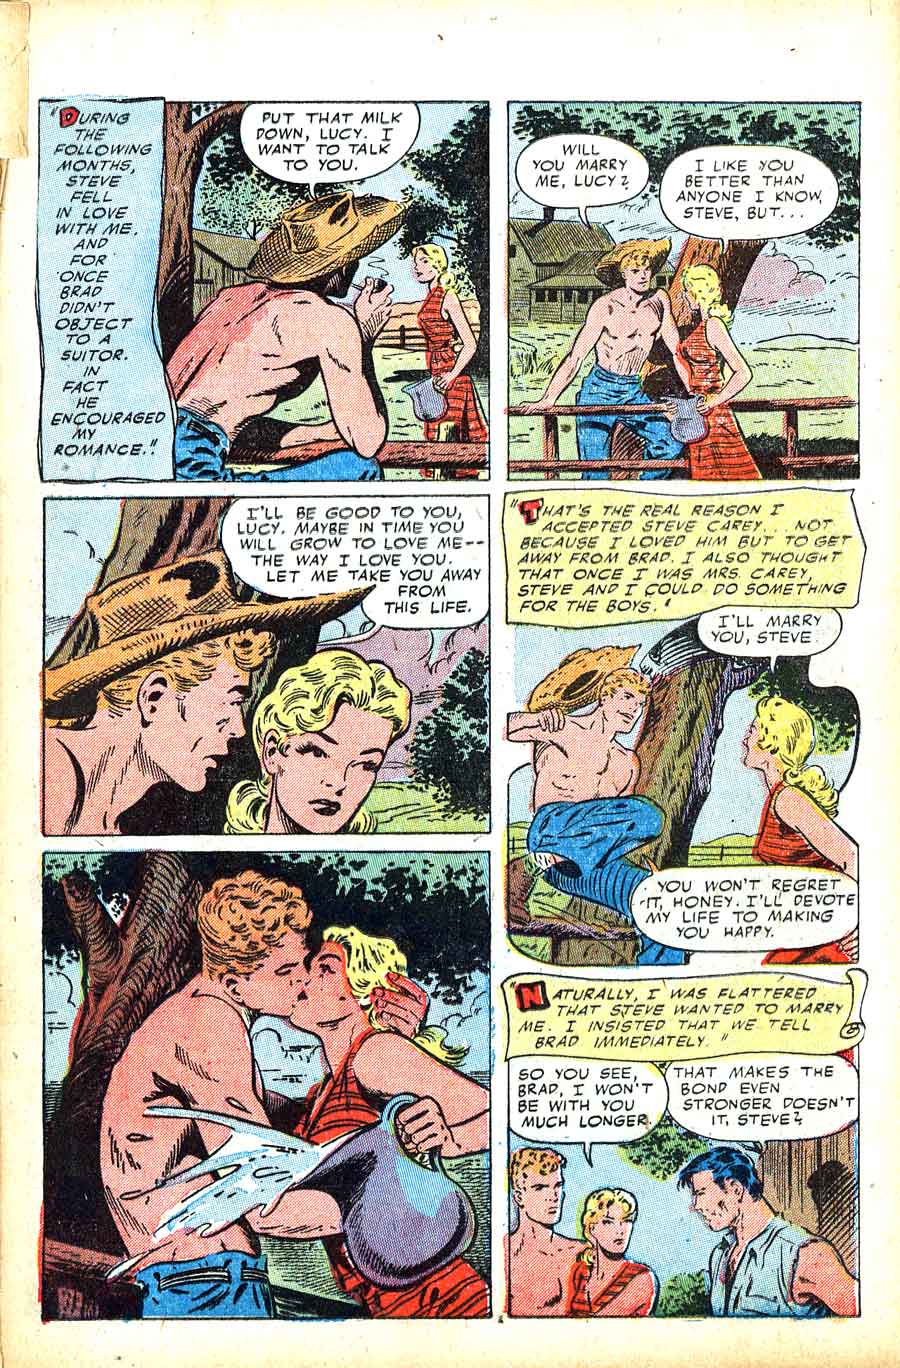 Pictorial Romances #17 st. john golden age 1950s romance comic book page art by Matt Baker